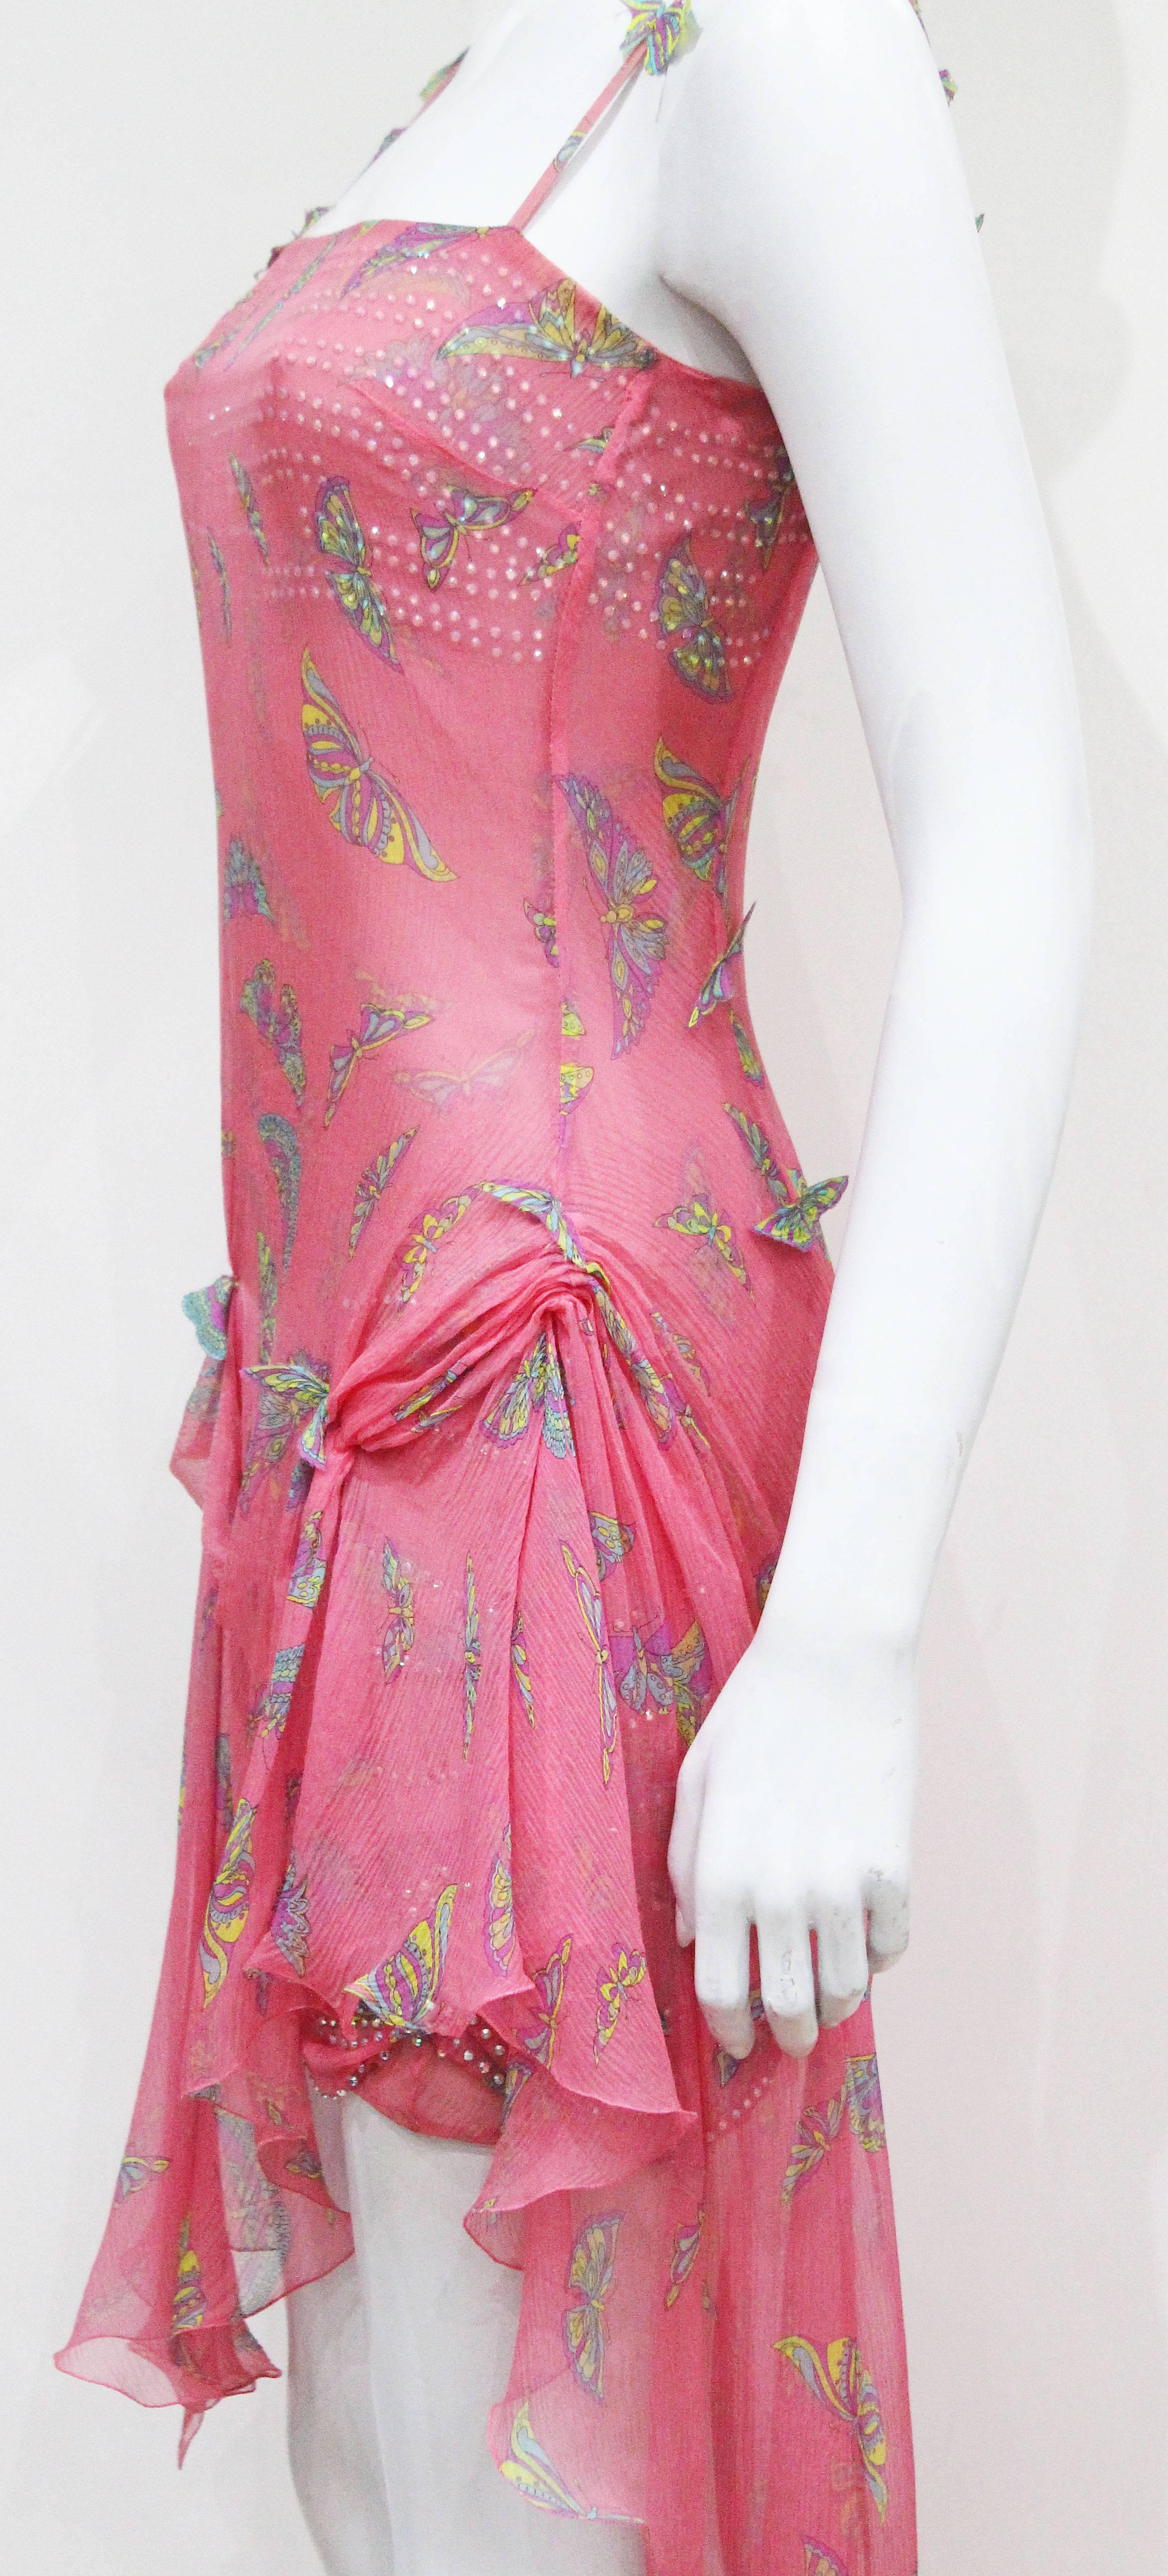 Pink Gianni Versace Butterfly Silk Chiffon Dress, c. 1990s